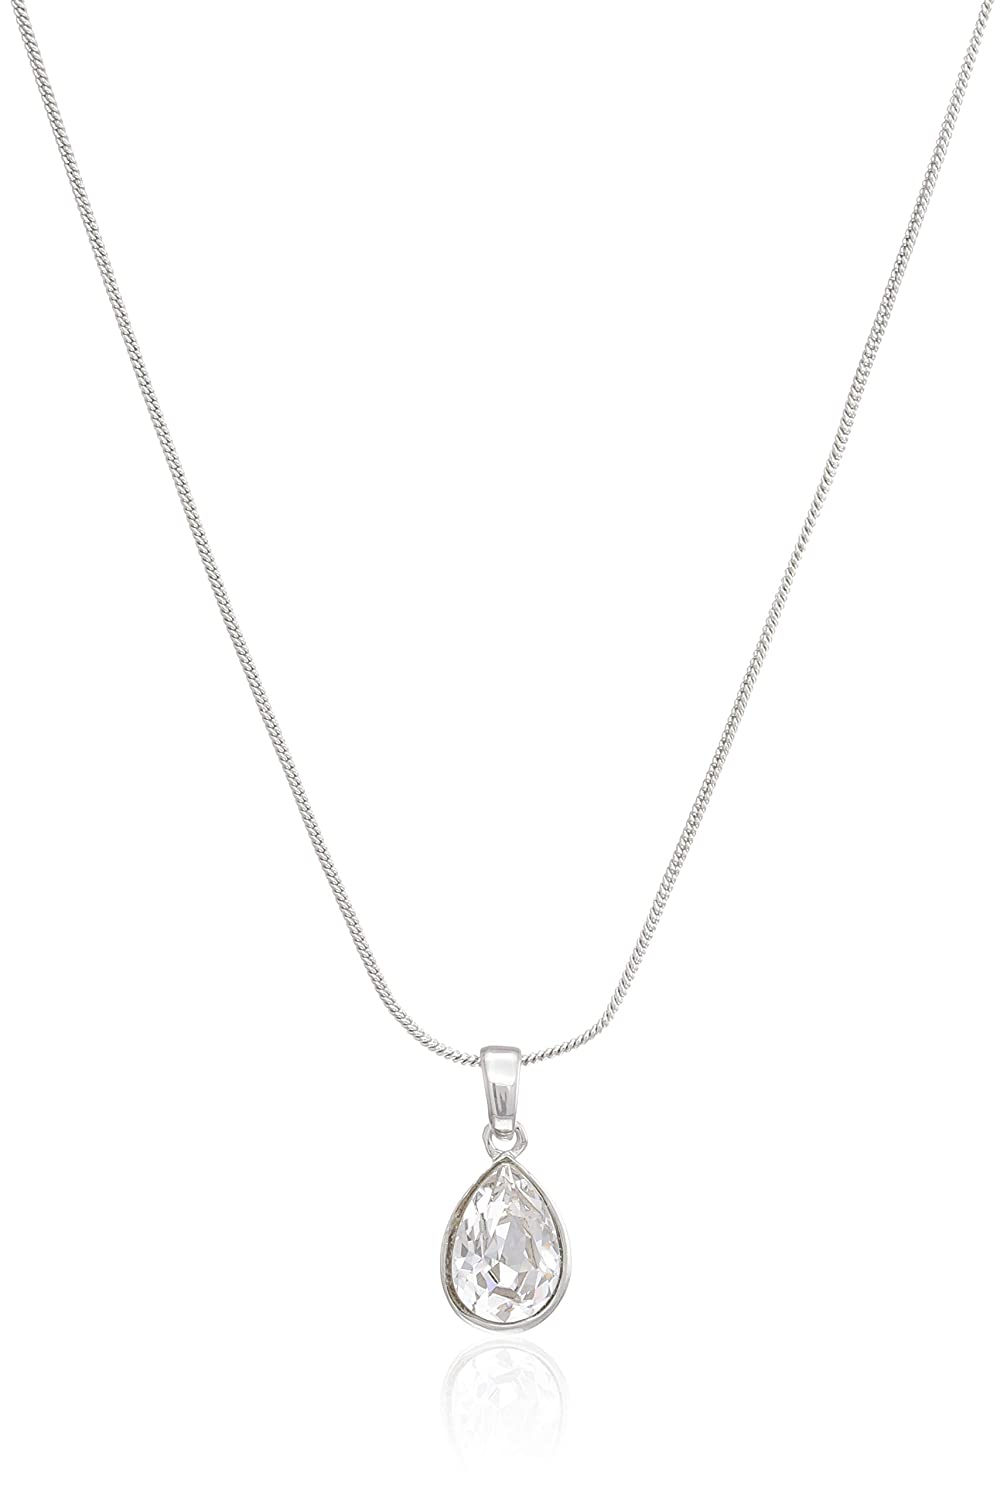 Estele  rhodium tone chain with white tear drop crystal pendant for women